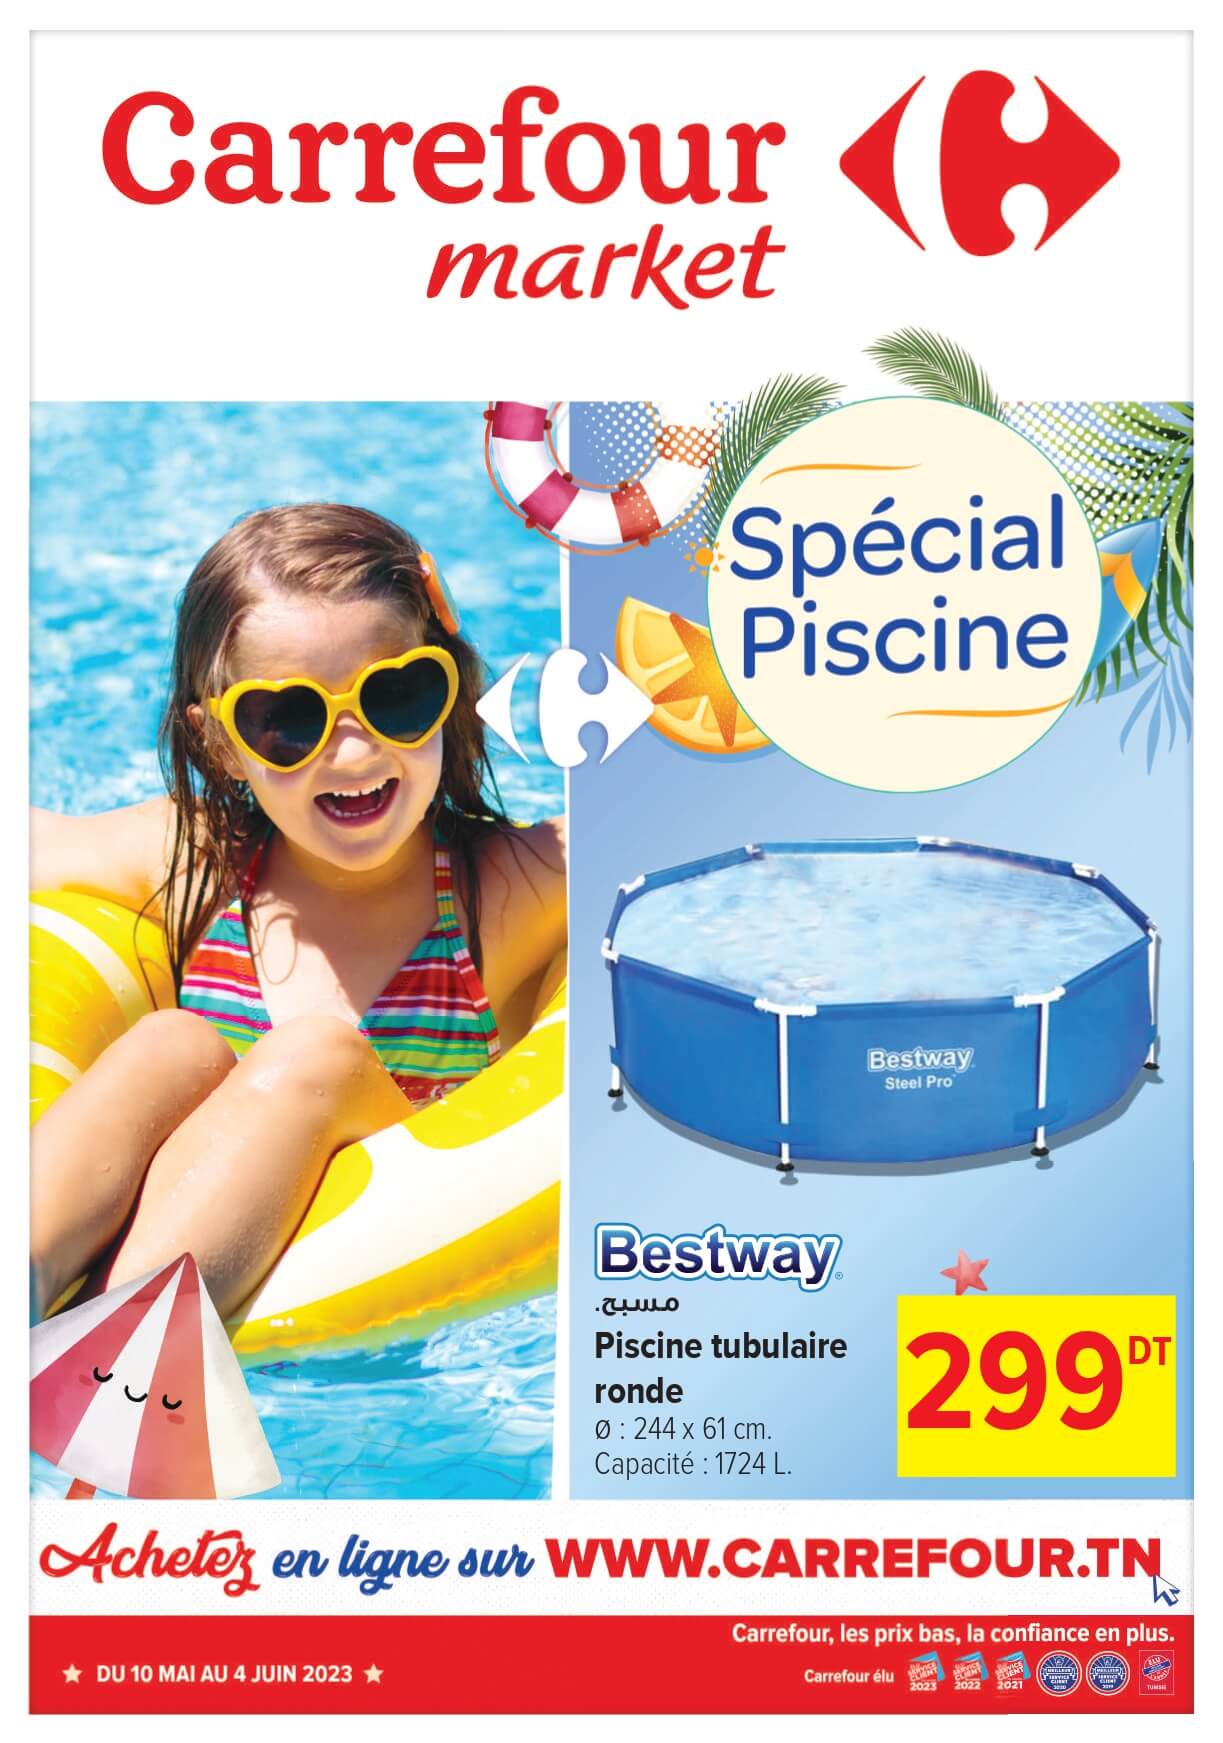 carrefour-market-special-piscine